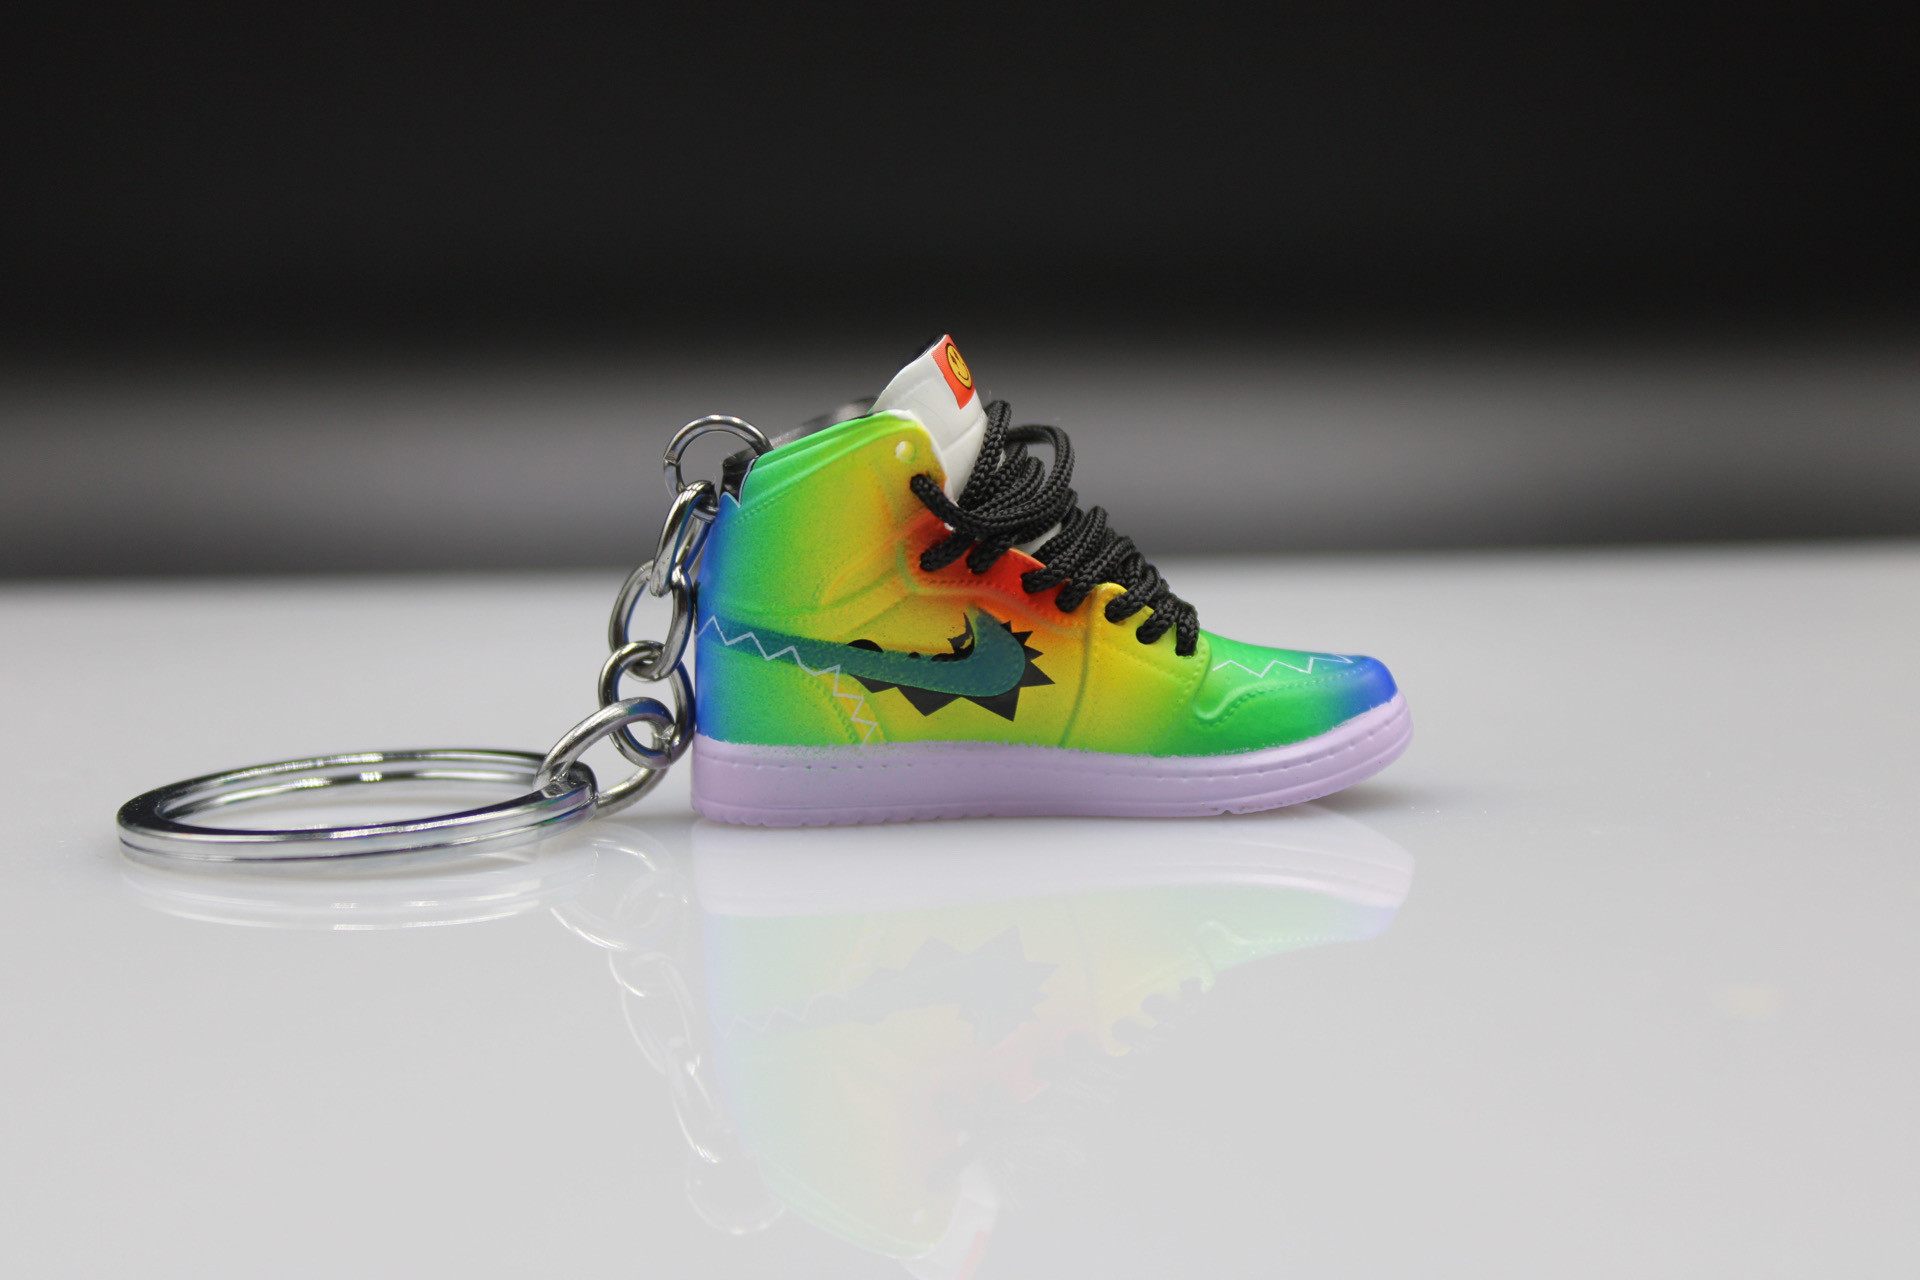 Porte-clés Sneakers 3D - Air Jordan 1 X J. Balvin - Colores Y Vibras